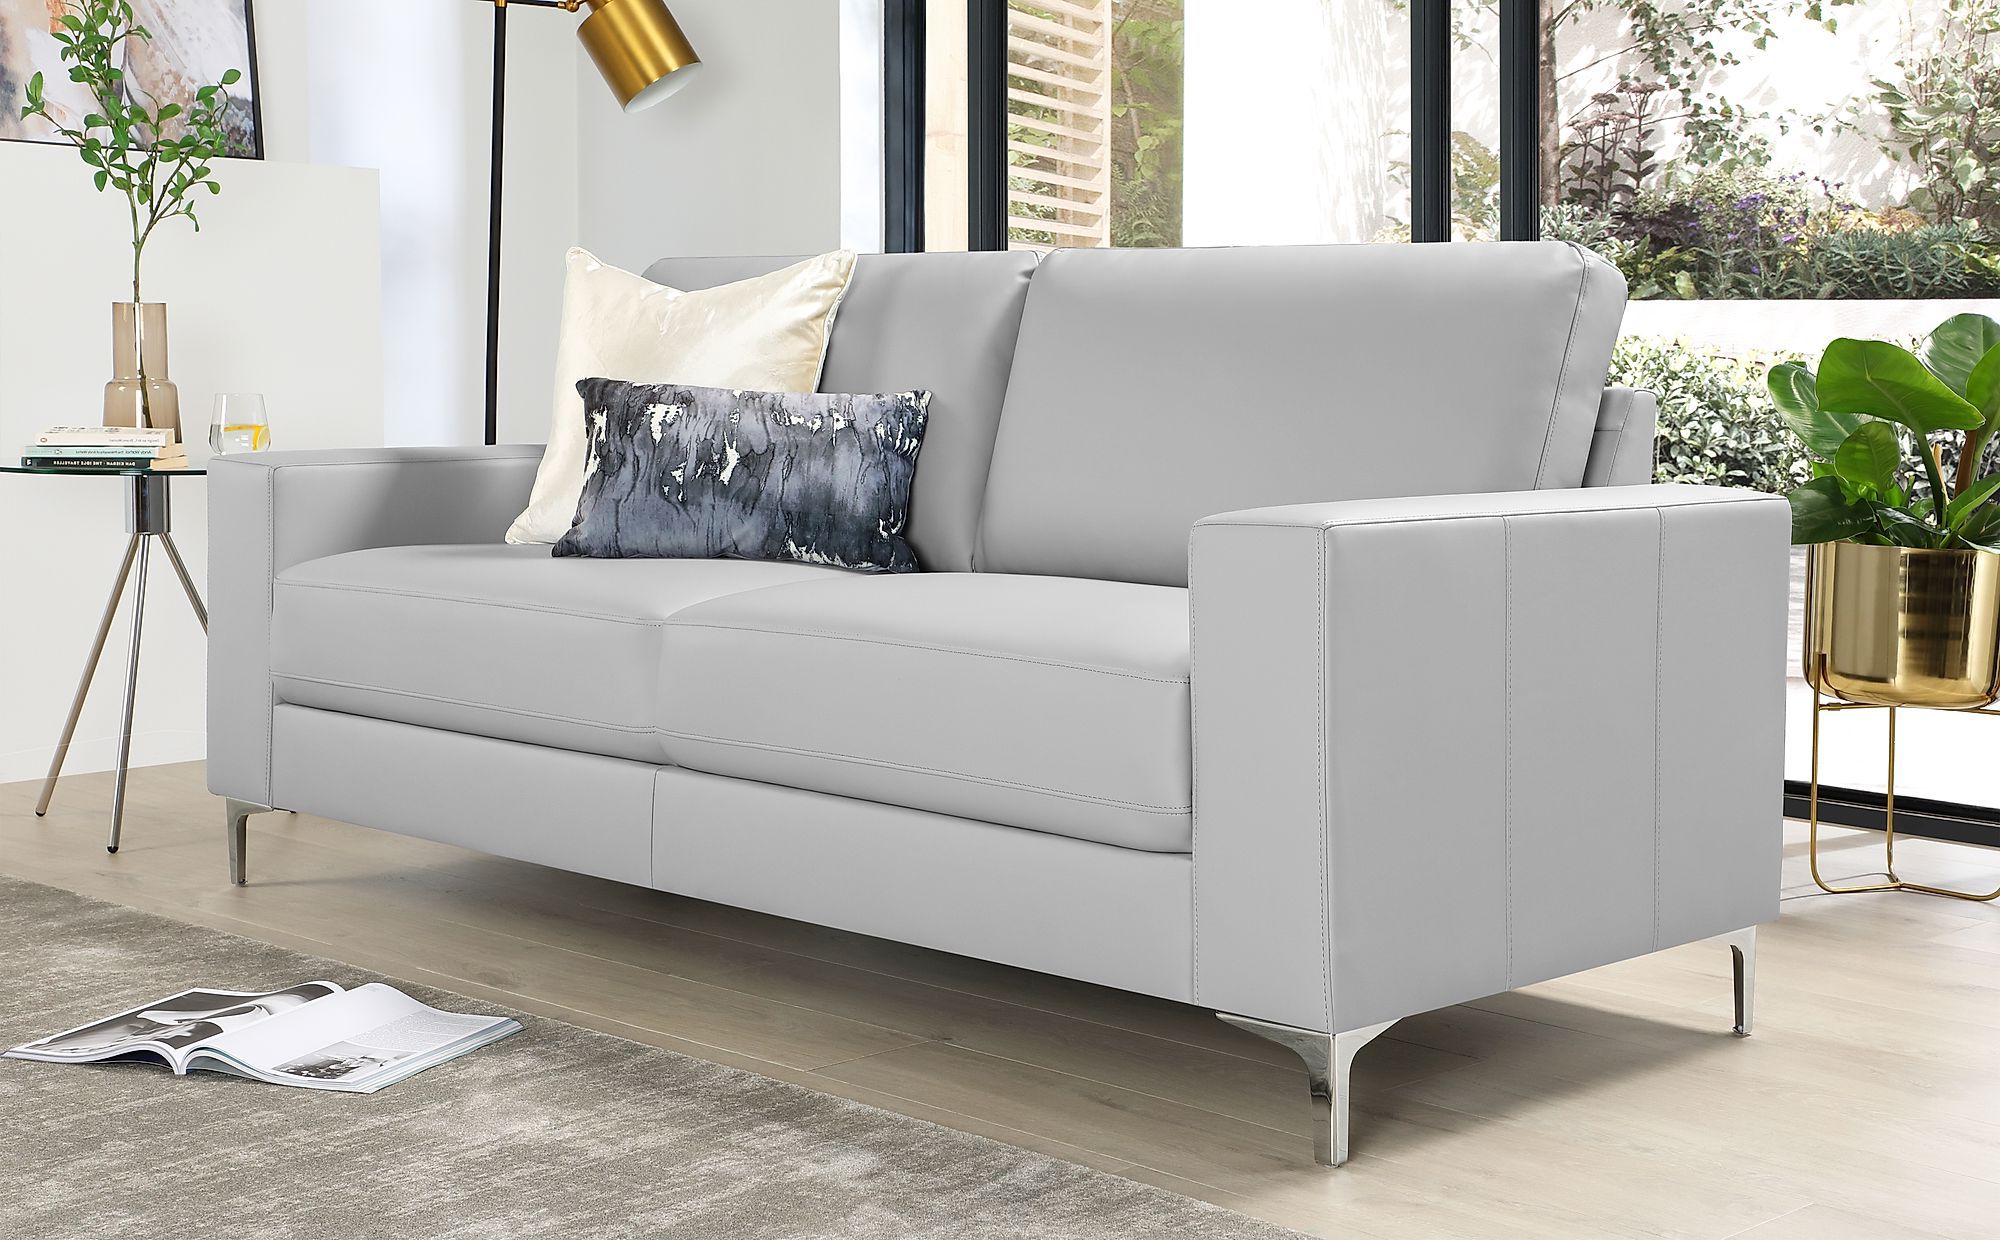 Furniture Choice Regarding Sofas In Light Grey (View 2 of 15)